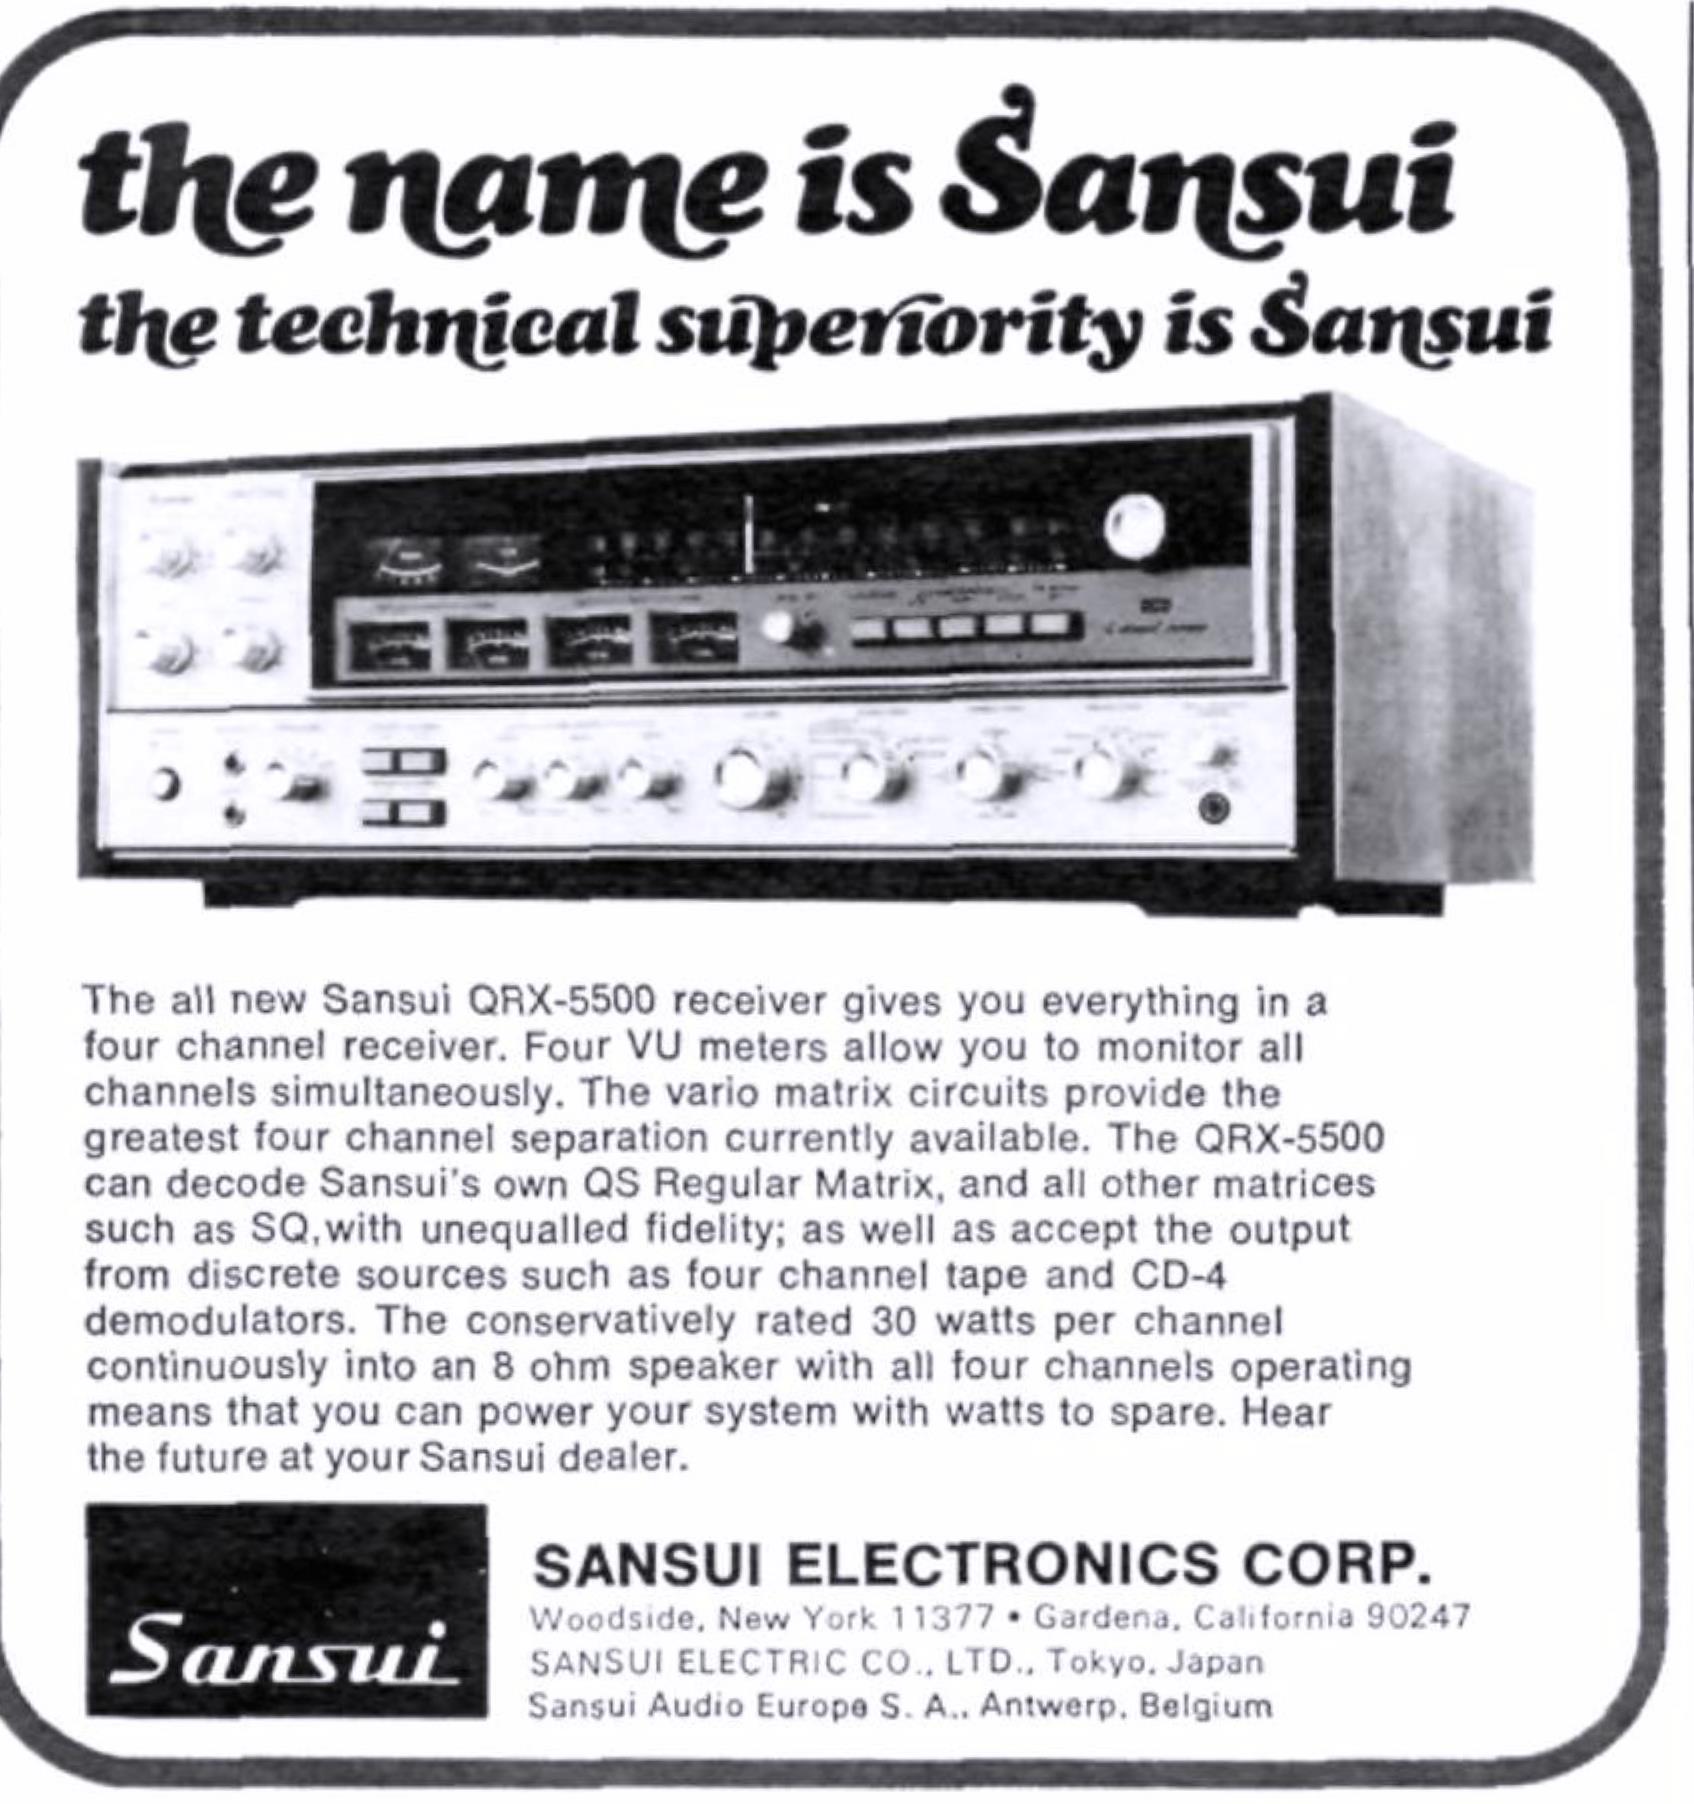 Sansui 1973 296.jpg